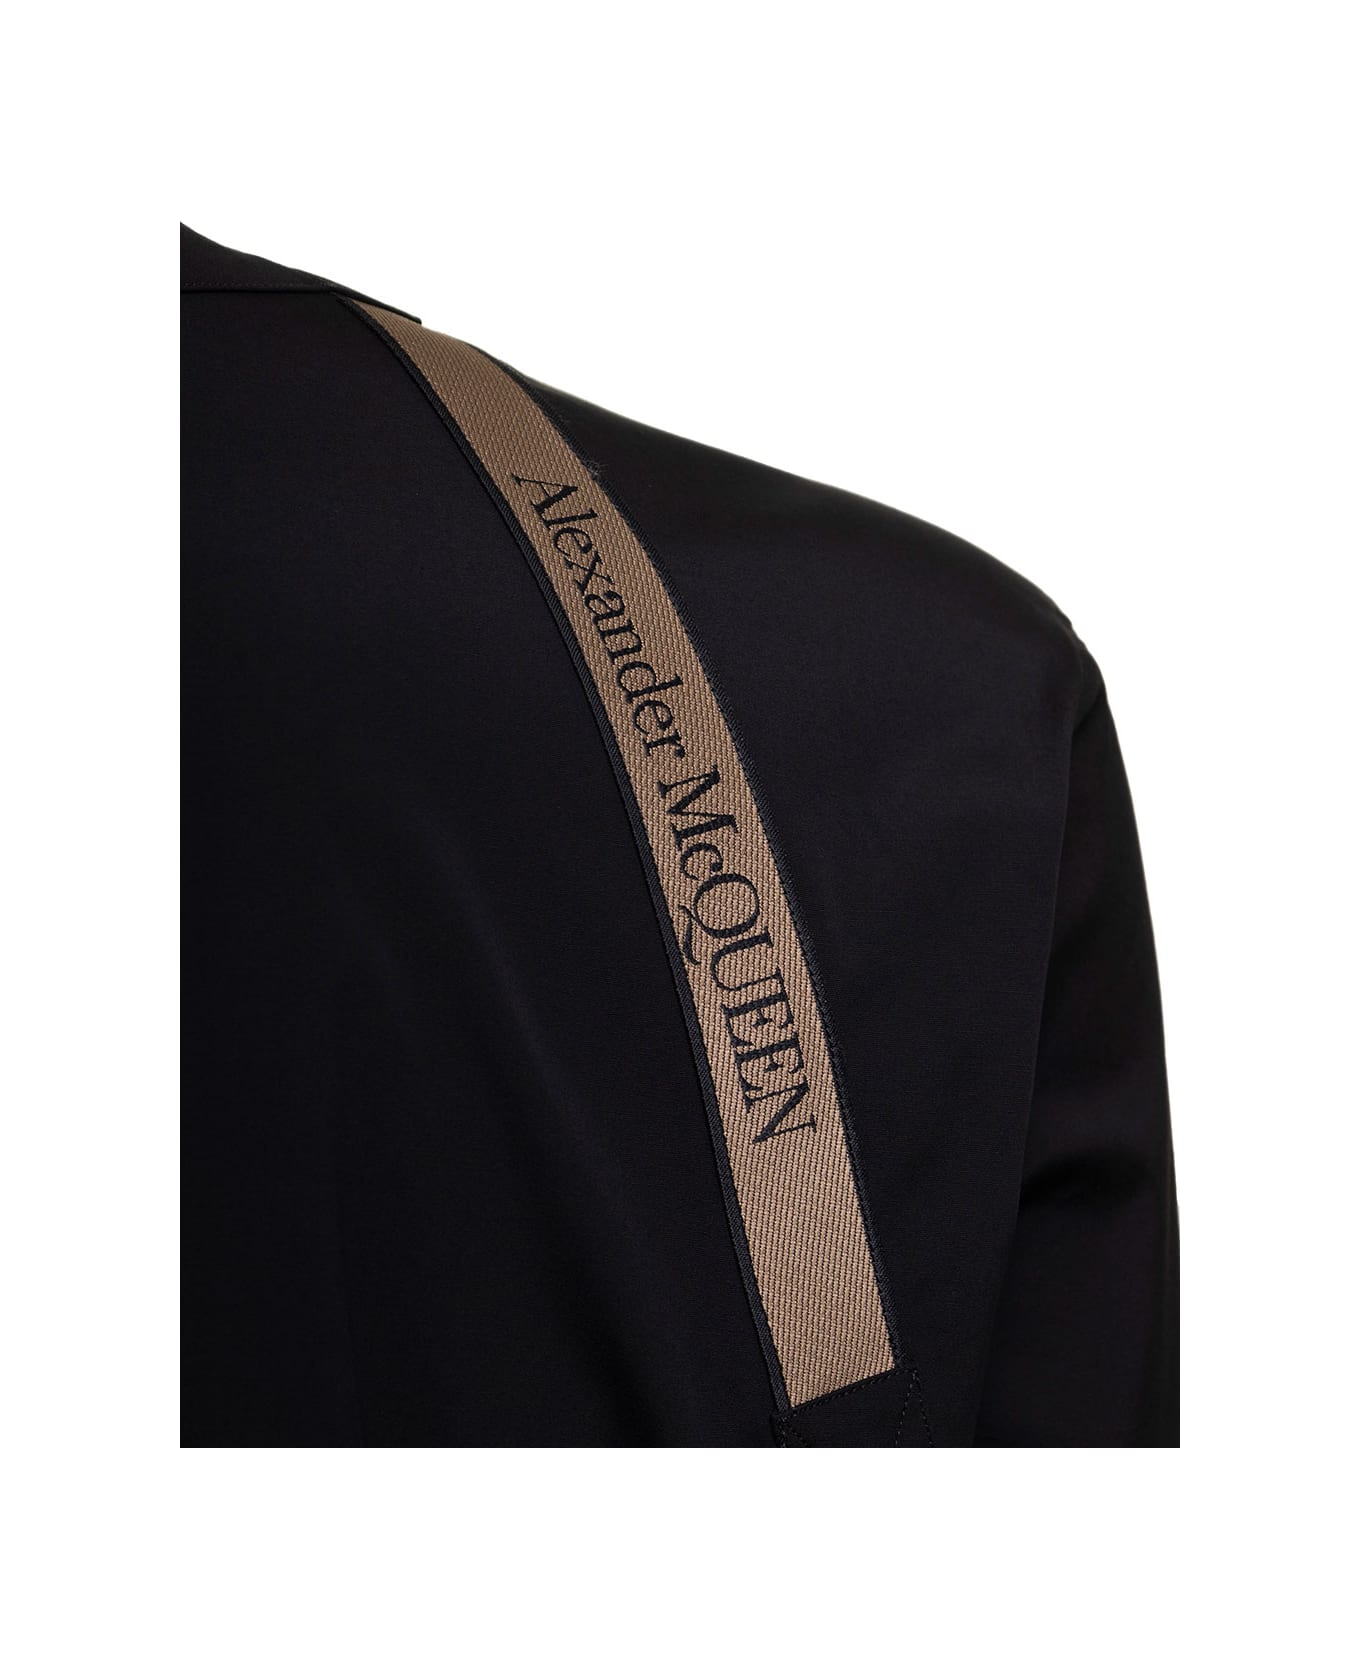 Alexander McQueen Man's Signature Harness  Black Cotton  Shirt - Black